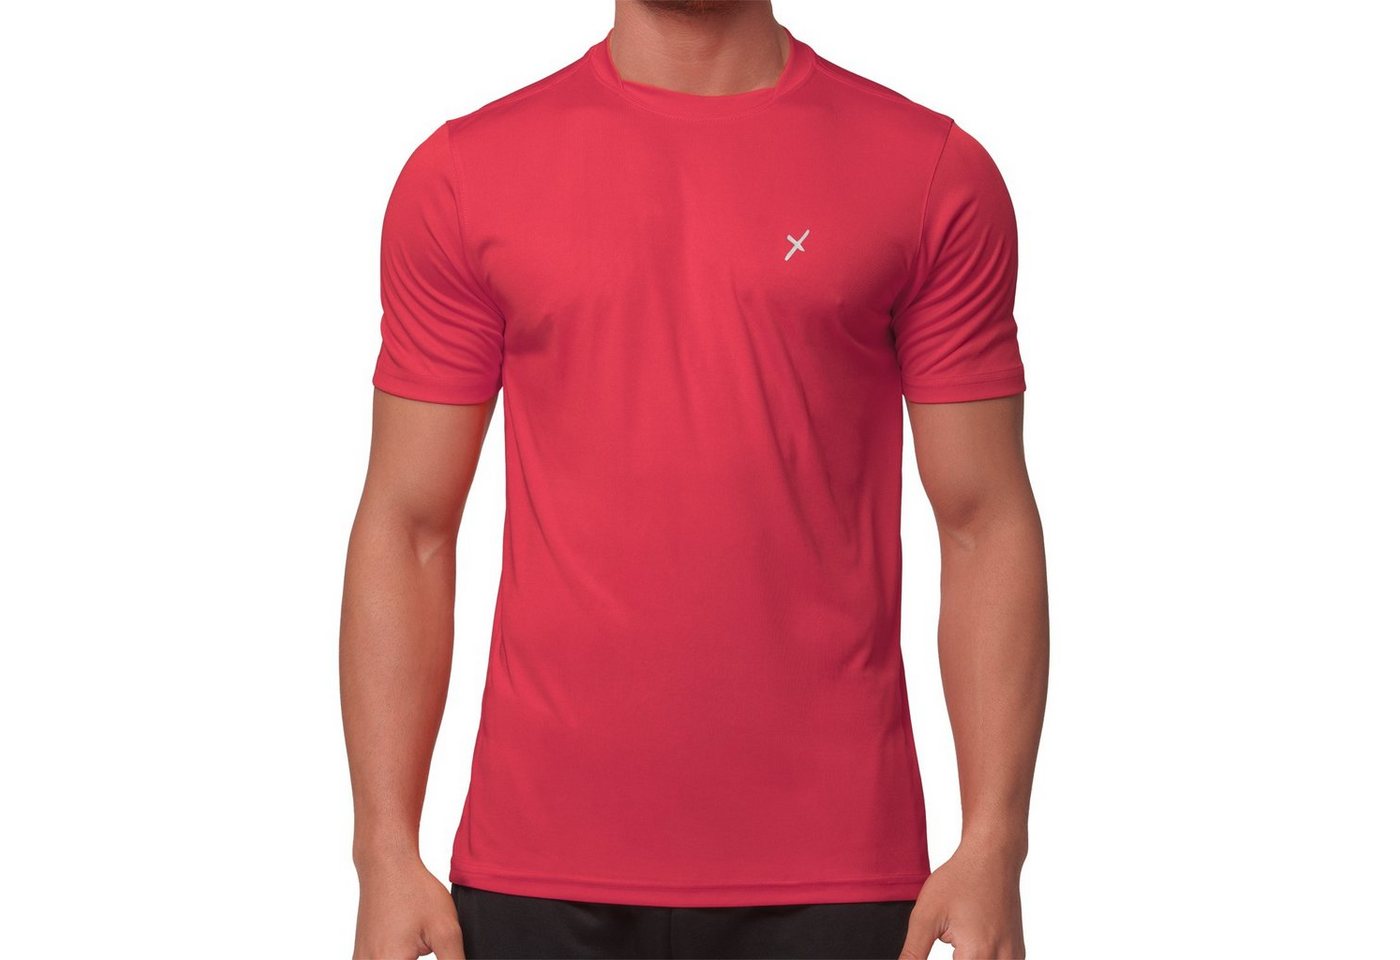 CFLEX Trainingsshirt Herren Sport Shirt Fitness T-Shirt Sportswear Collection von CFLEX